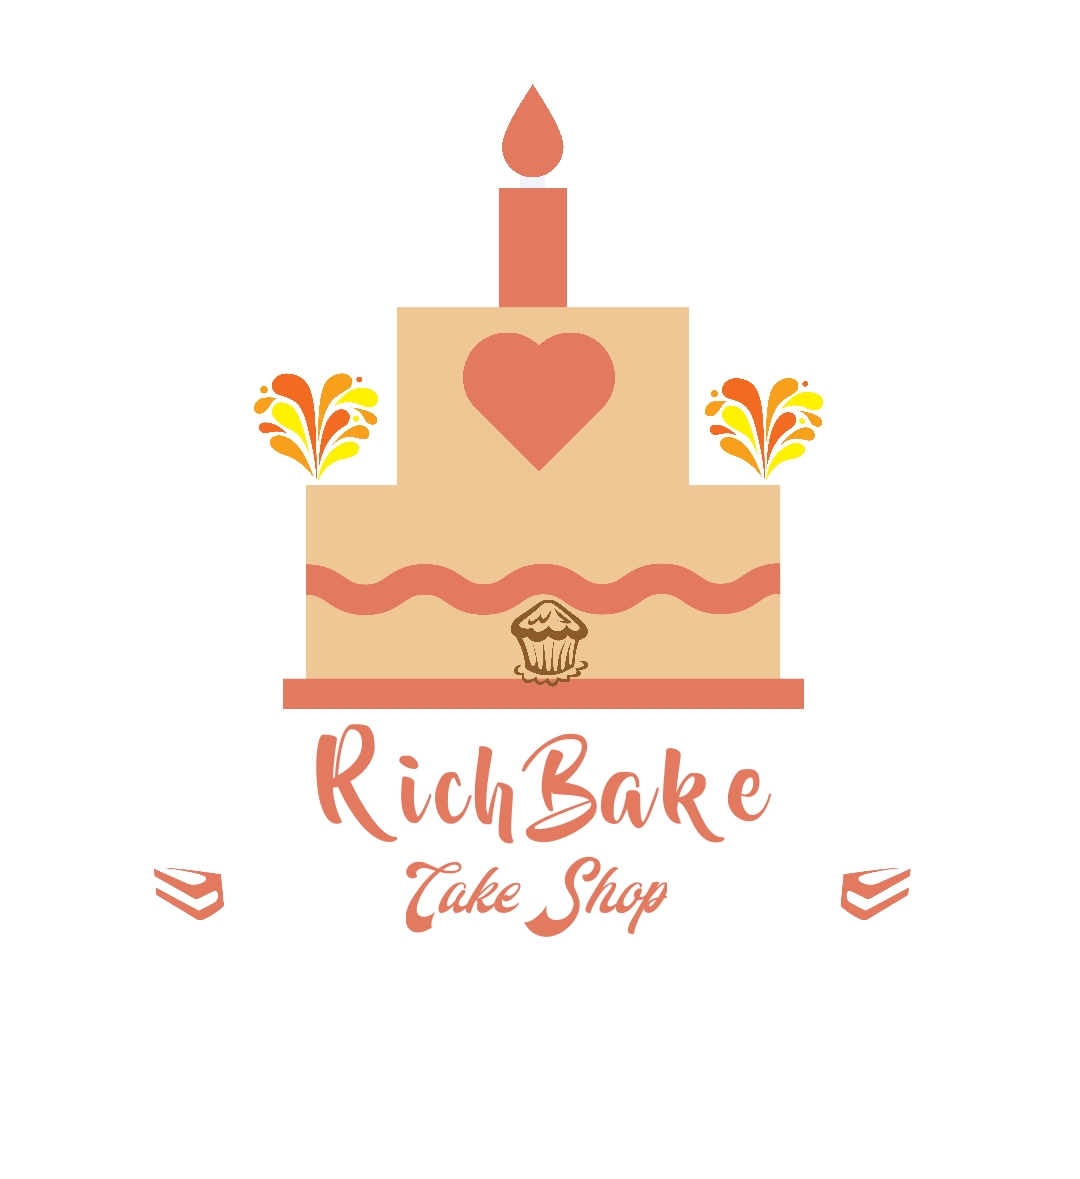 RichBake Cake Shop Rohini Delhi online delivery in Noida, Delhi, NCR,
                    Gurgaon